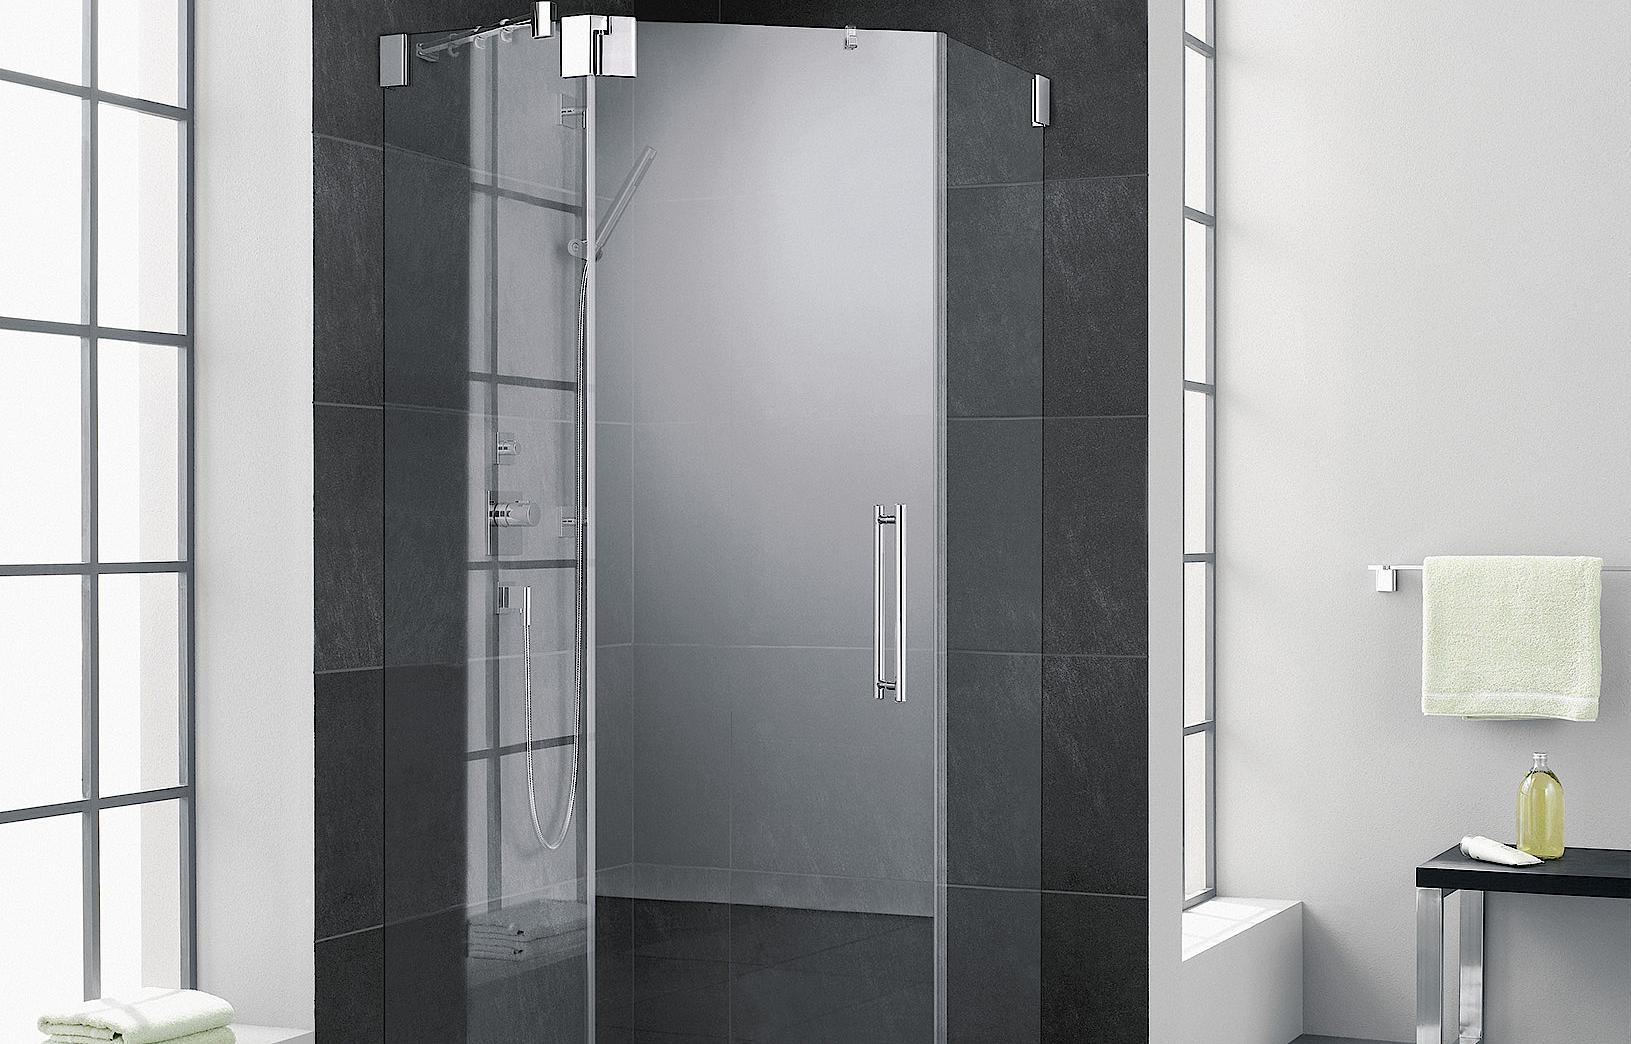 Kermi hinged shower enclosure, PASA pentagon shower enclosure (two-part hinged door with fixed panels)